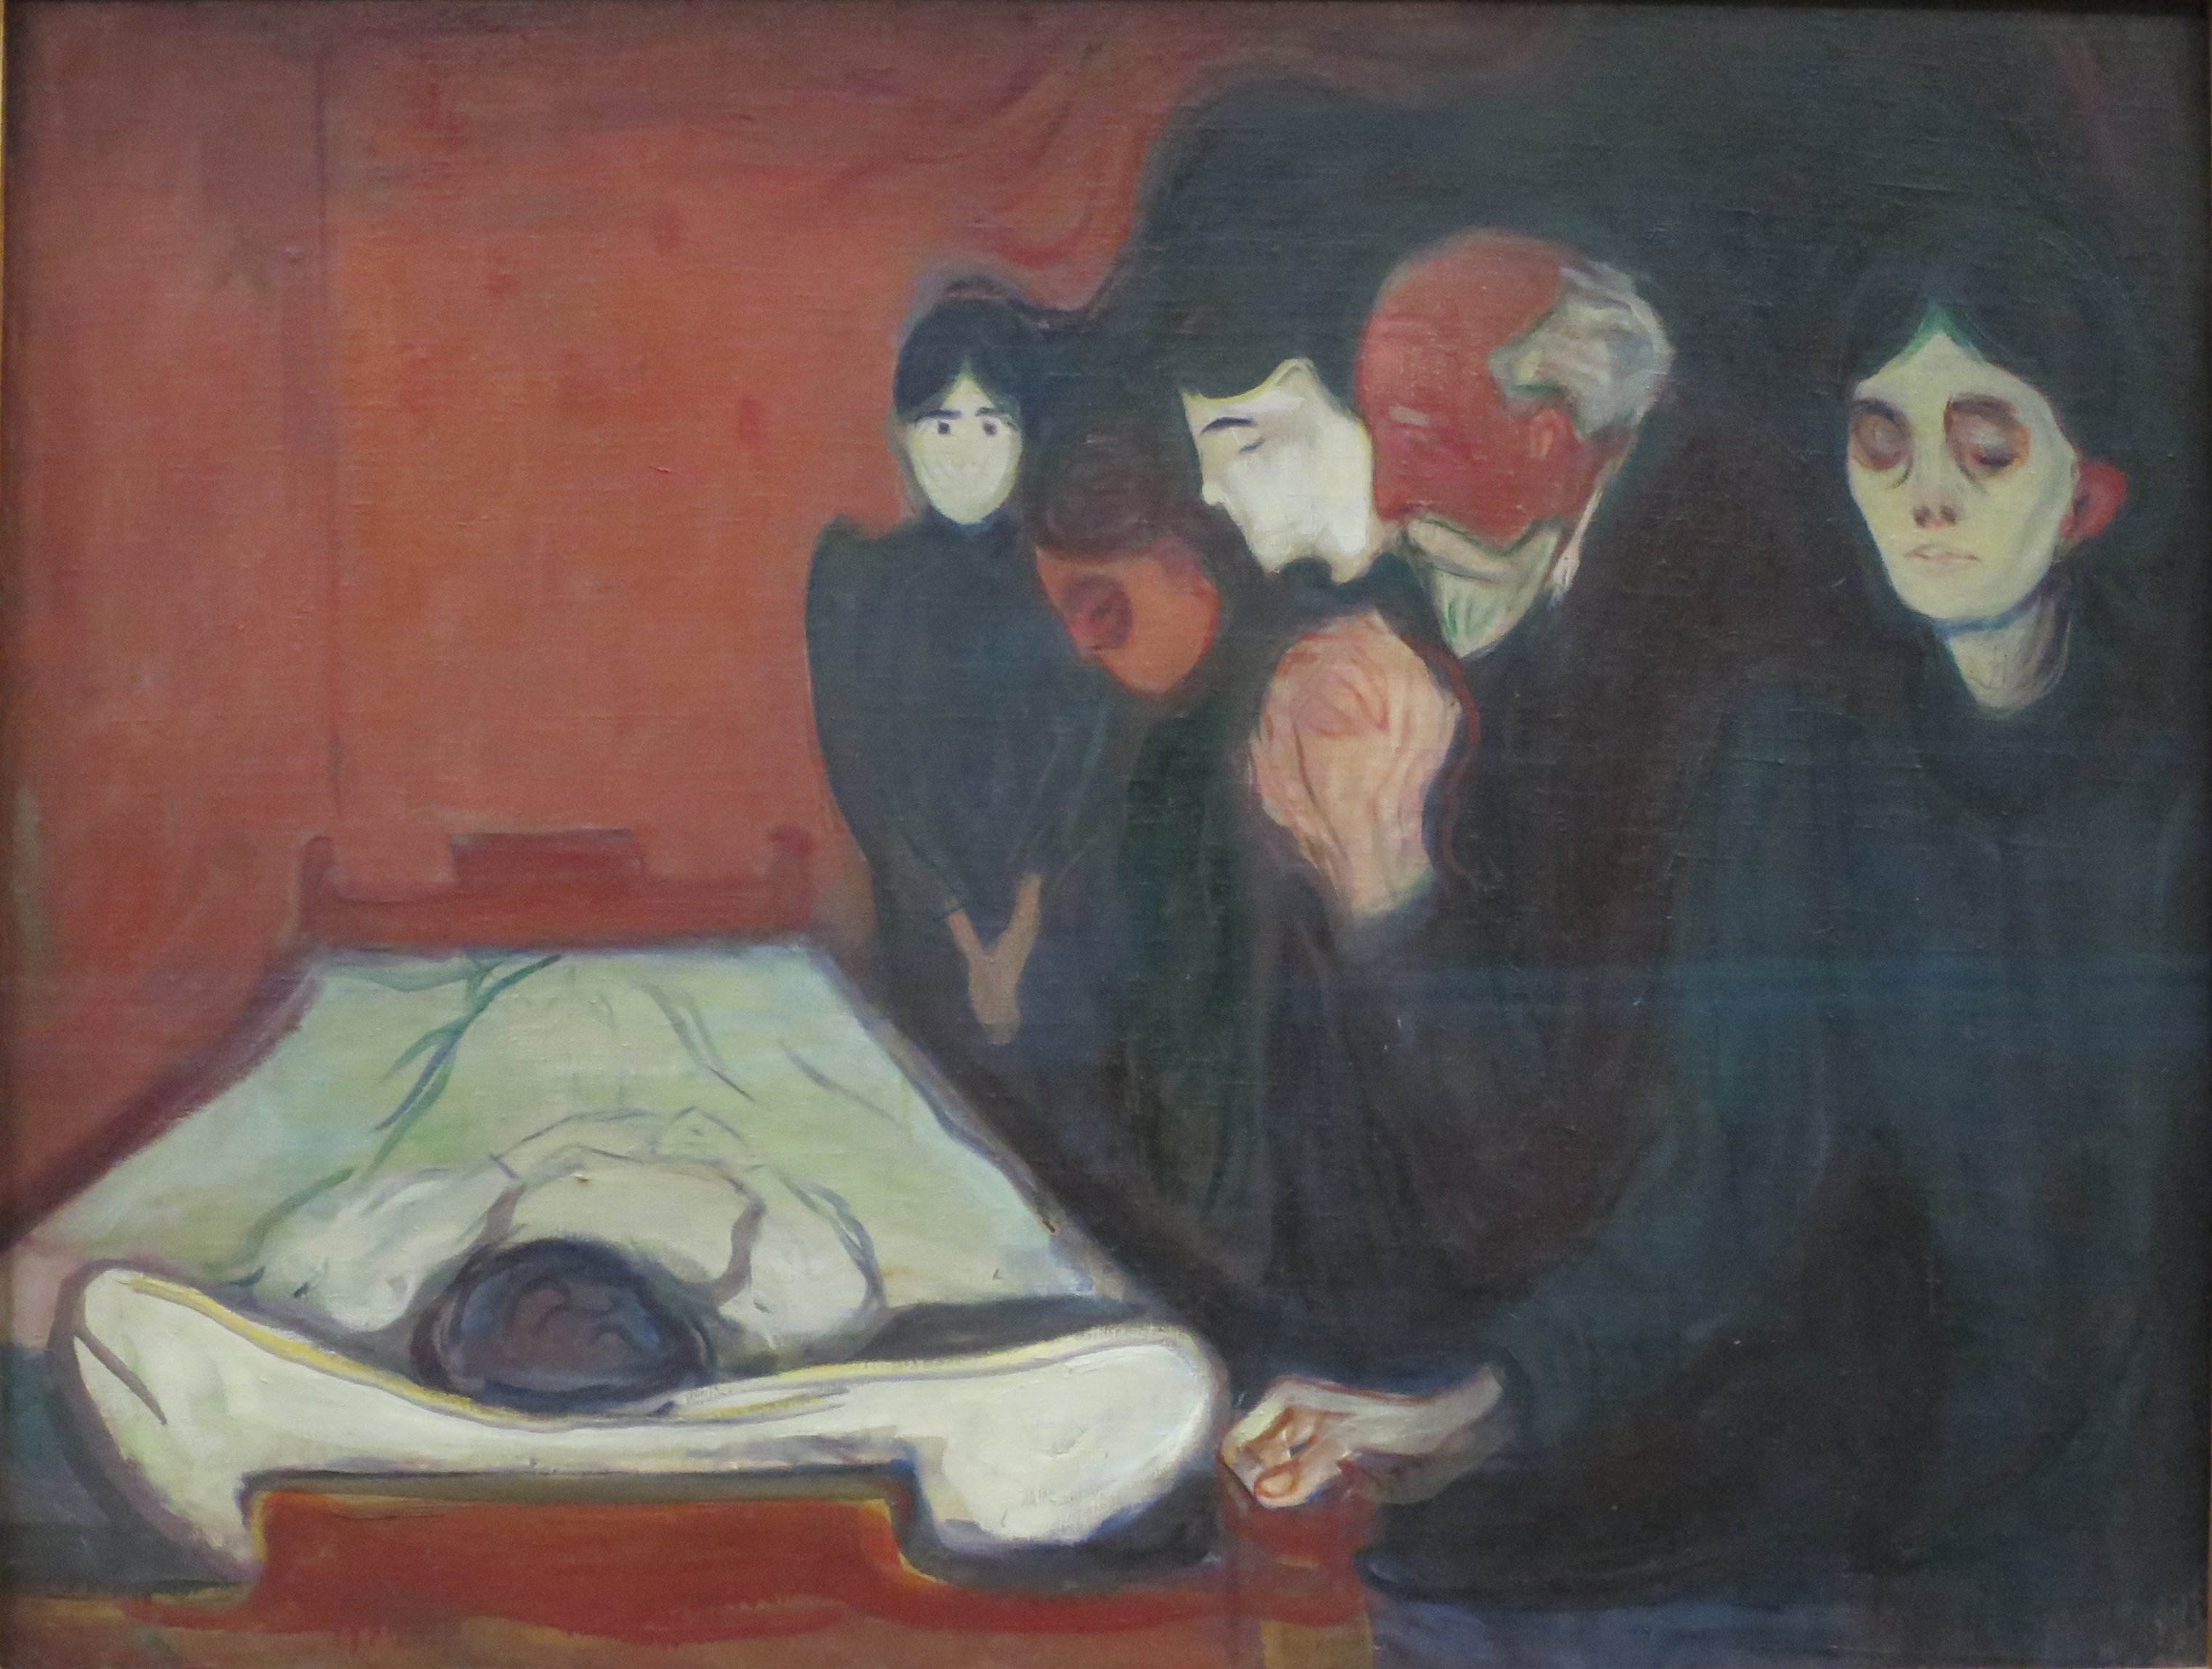 The Death Bed - Edvard Munch - 1895